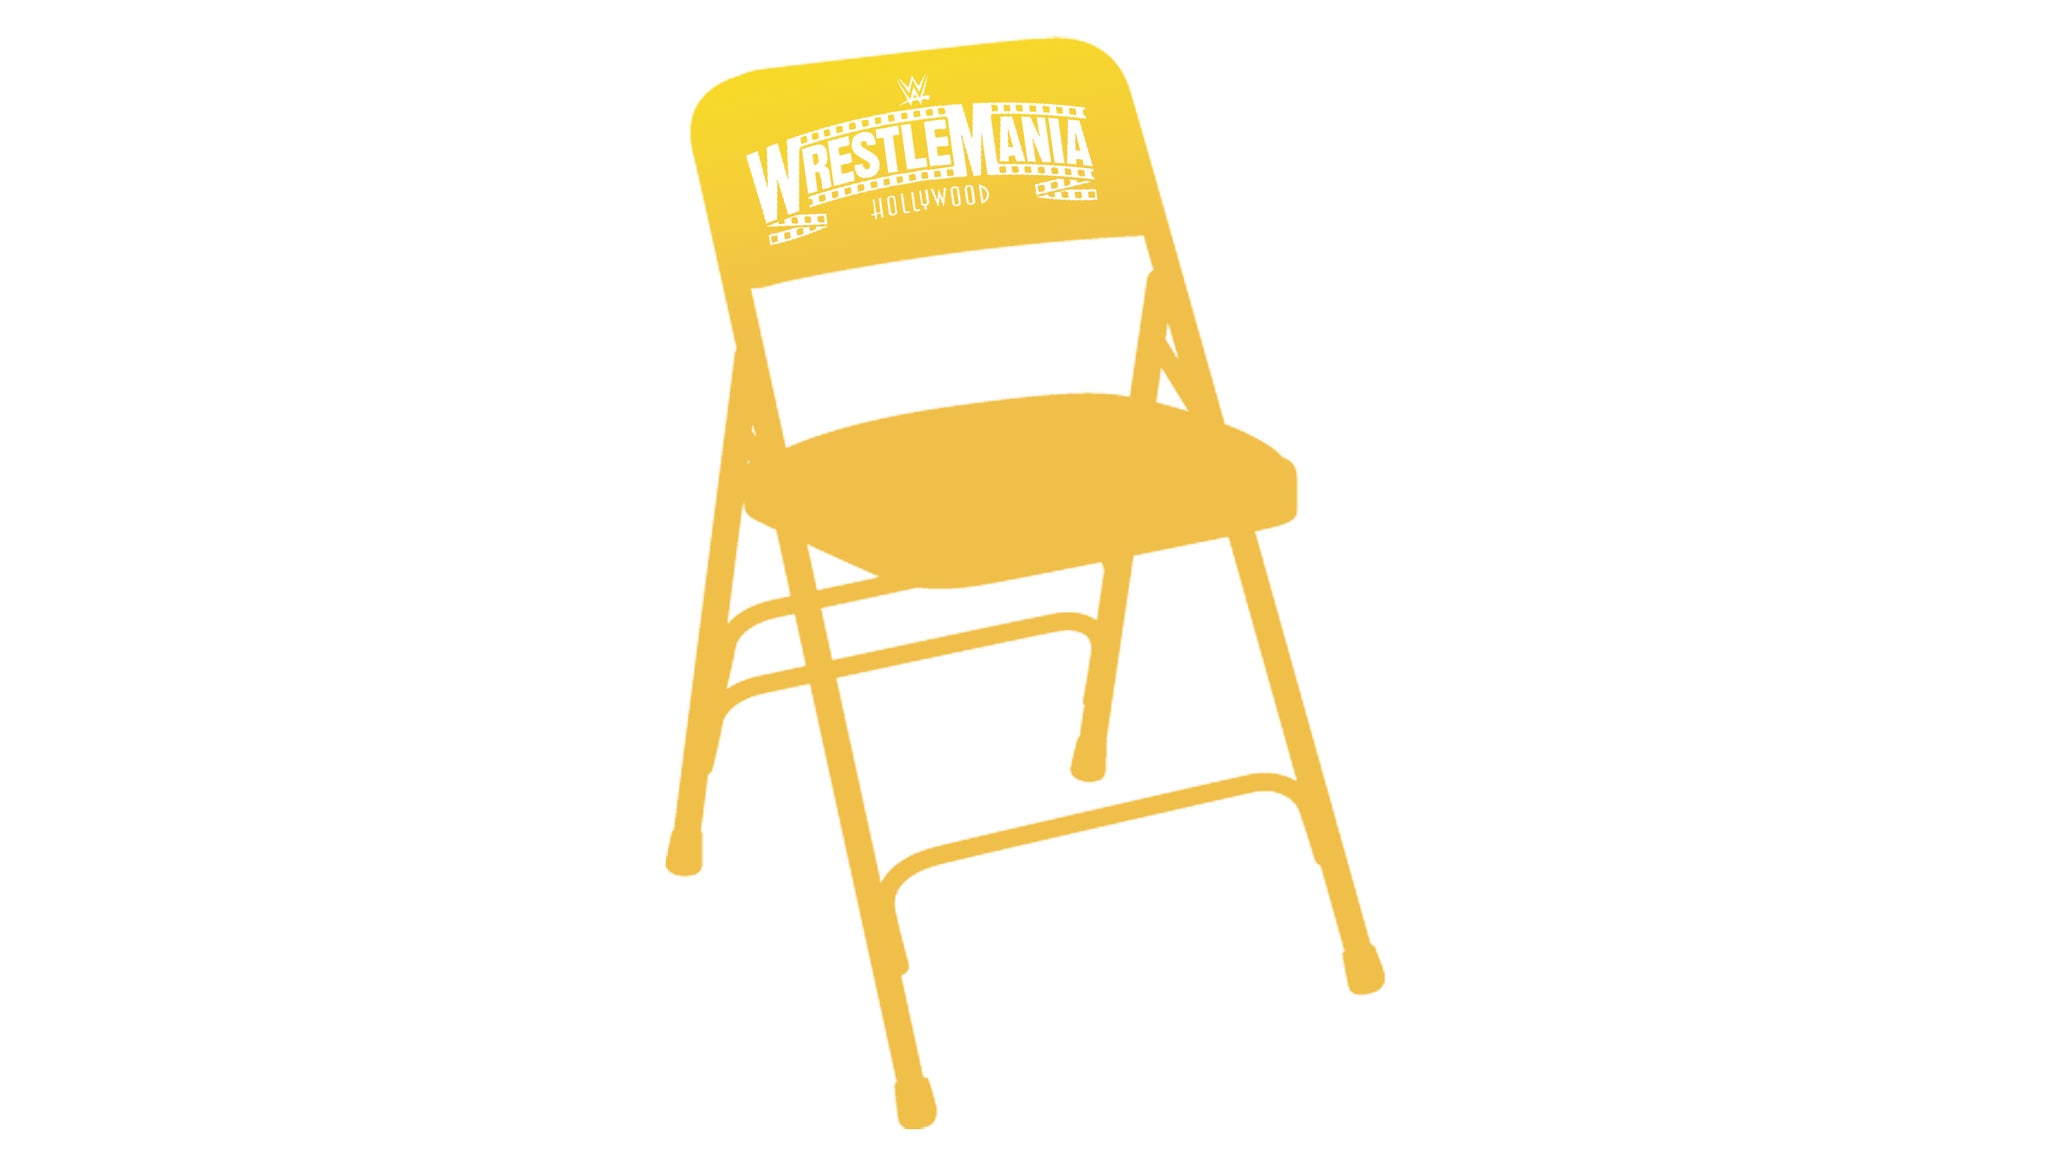 WrestleMania Commemorative Chair Tickets Event Dates & Schedule